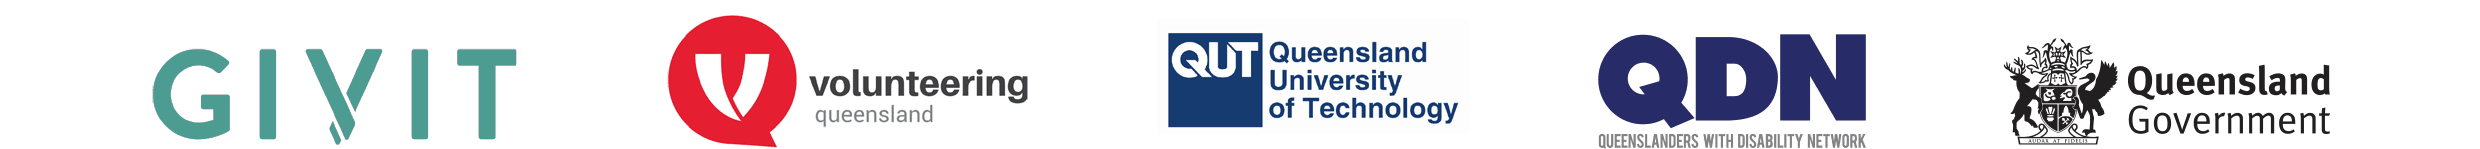 Row of five logos. GIVIT - Goods for good causes, Volunteering Queensland, QUT - Queensland University of Technology, QDN - Queenslanders with Disability Network, Queensland Government.